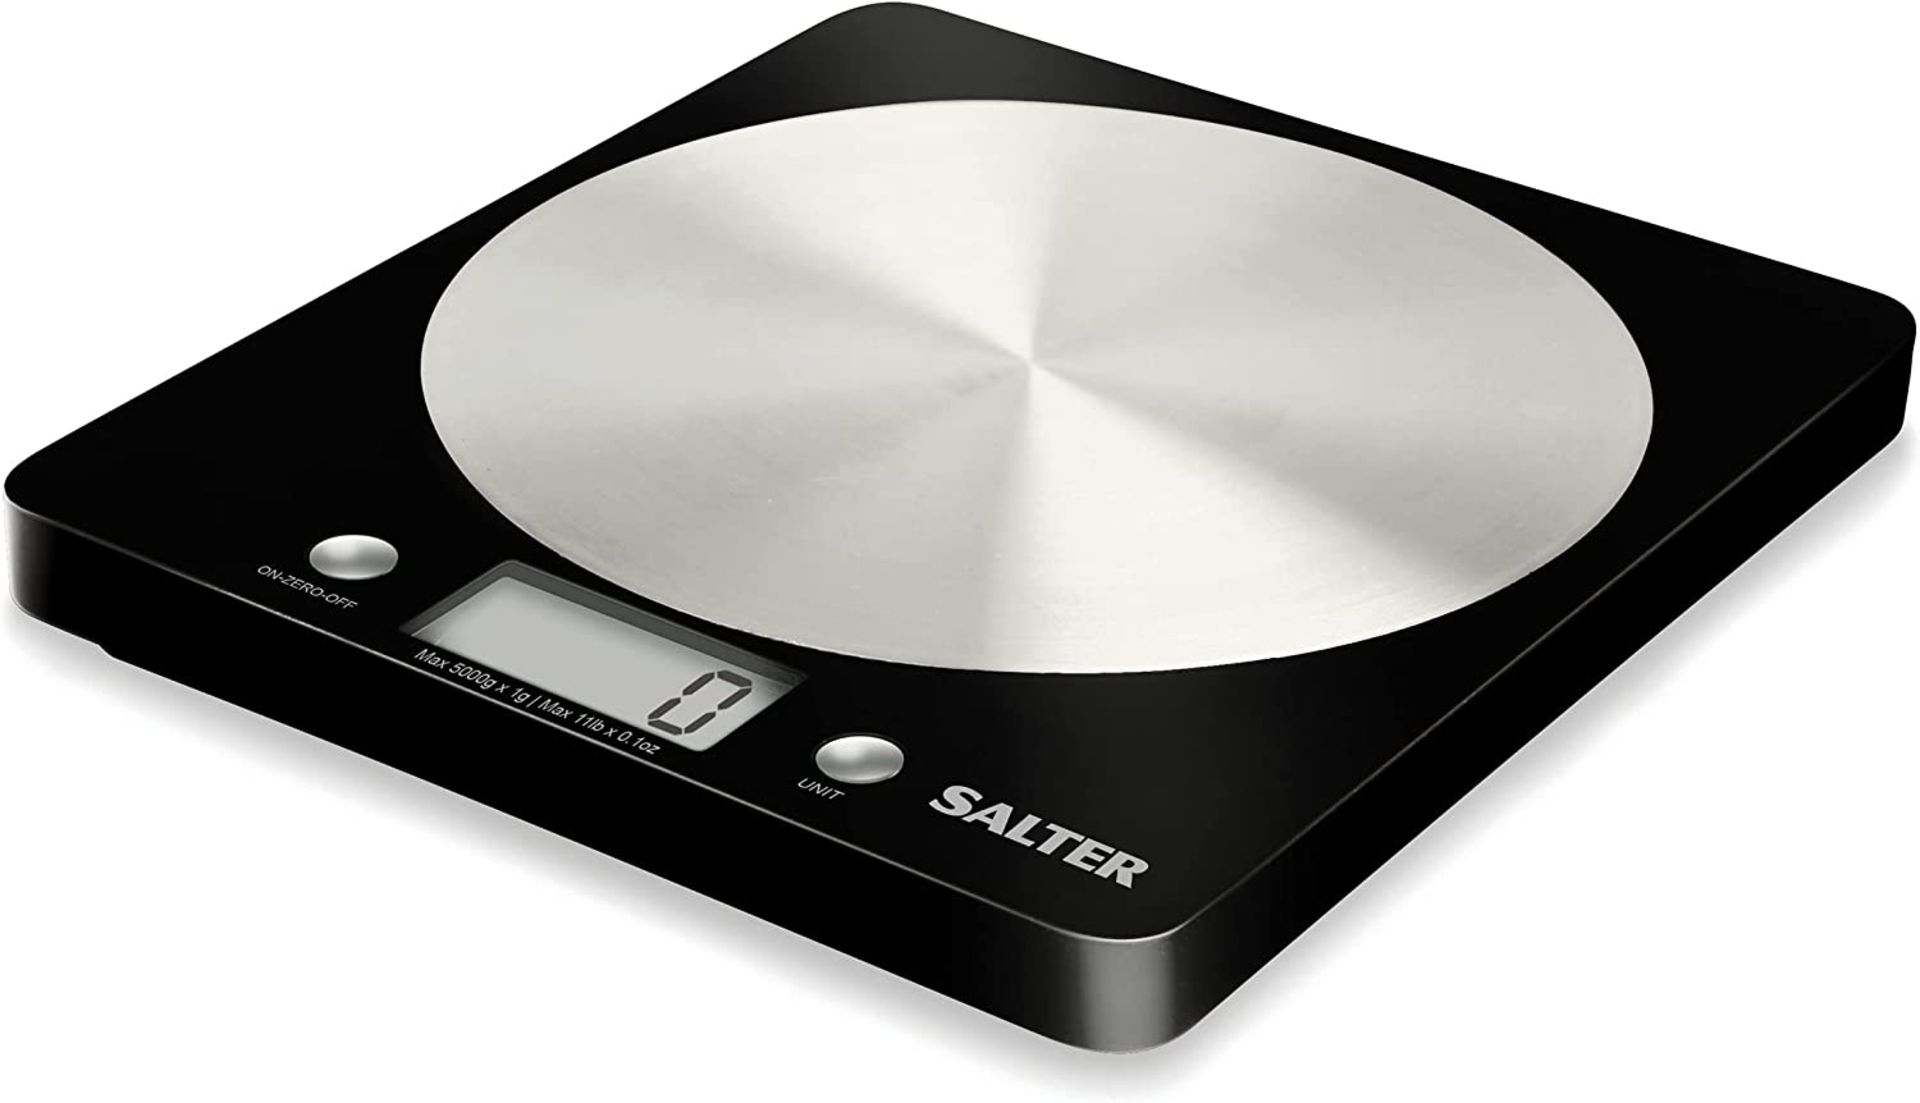 Salter Disc Electronic Scale. RRP £15.00 - GRADE U